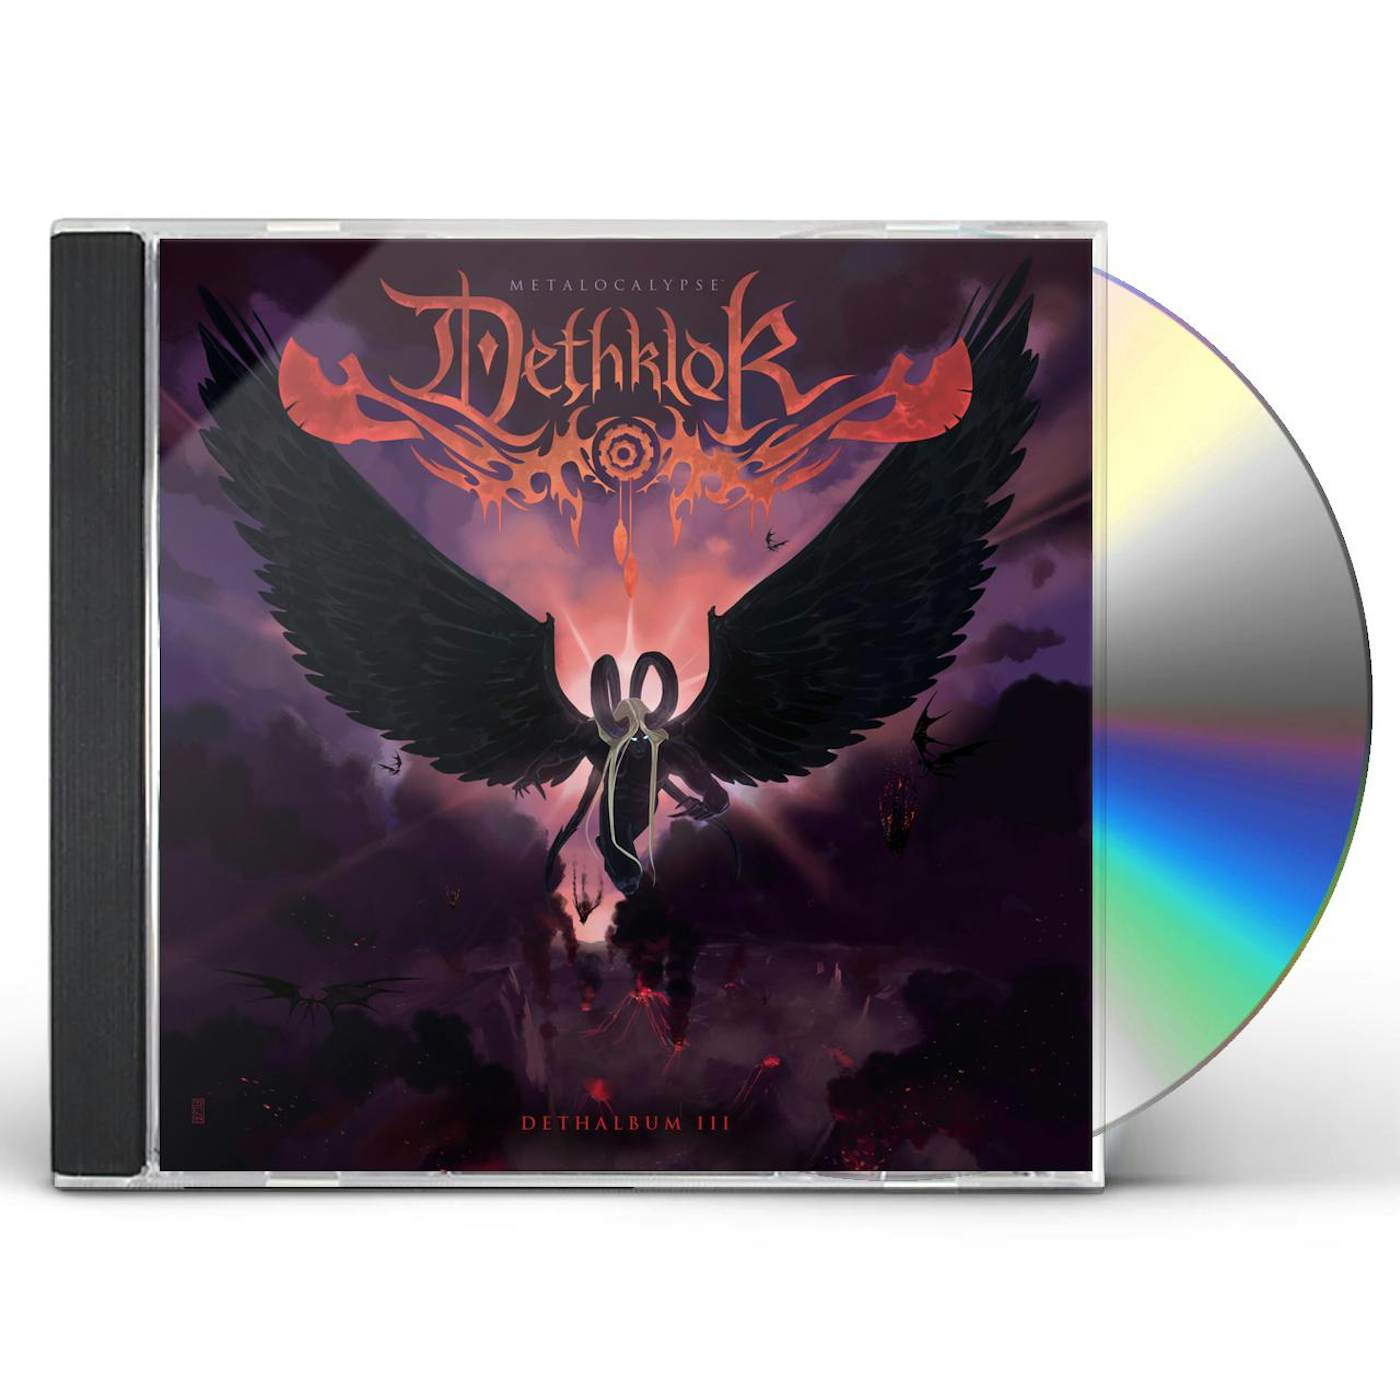 Metalocalypse: Dethklok DETHALBUM III CD